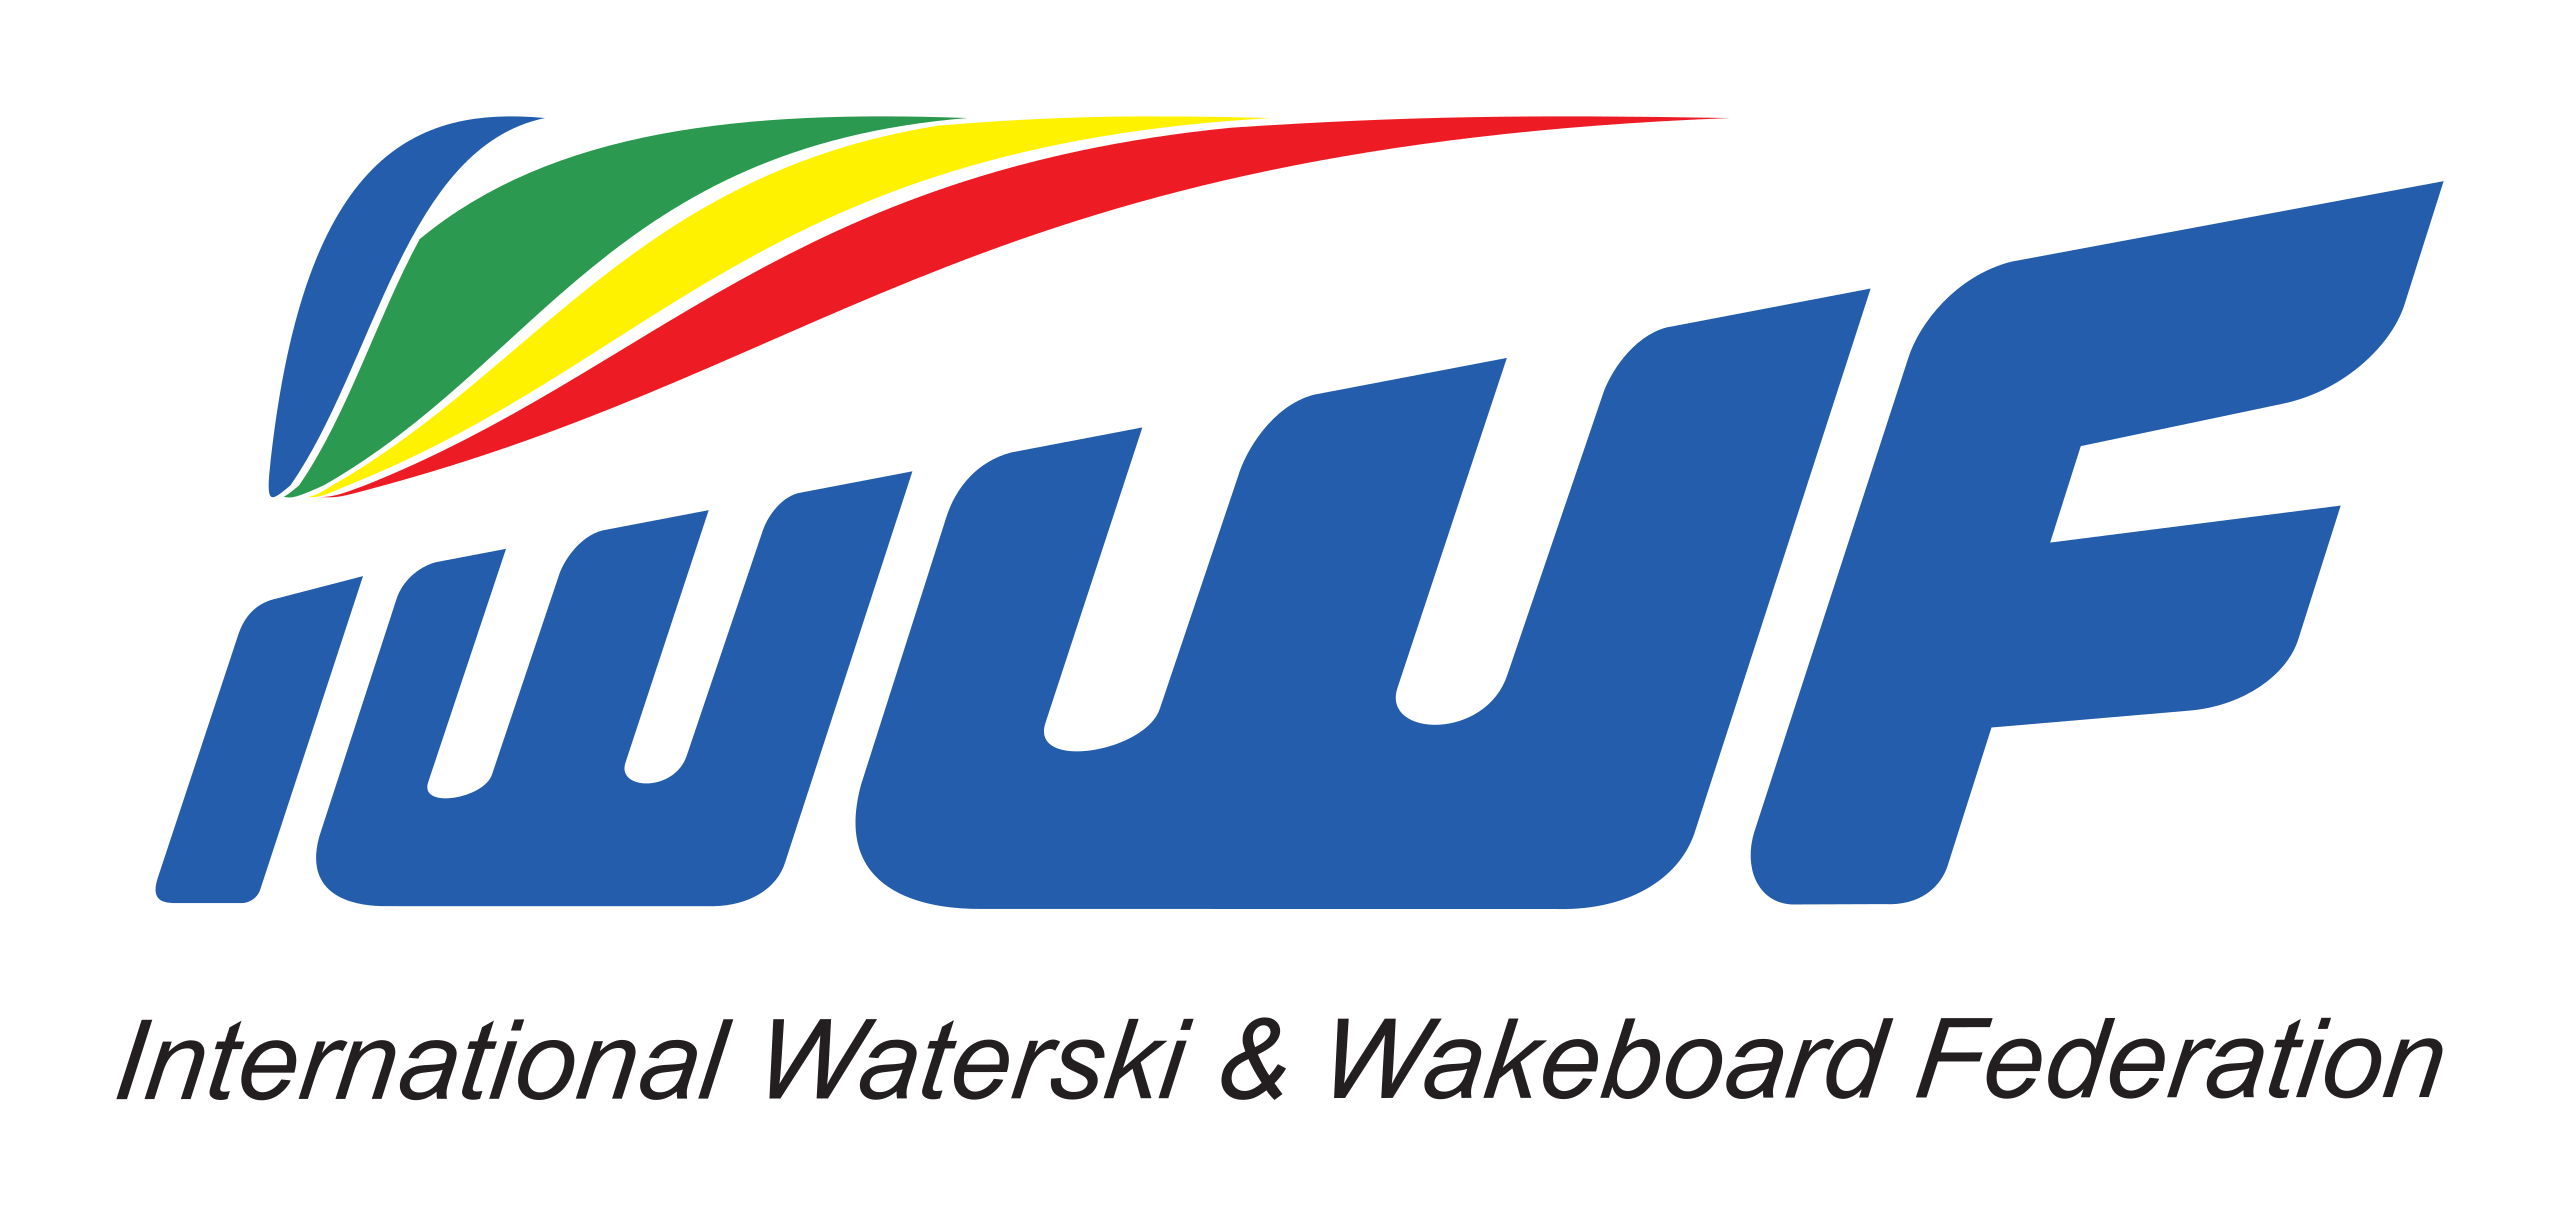 International_Waterski_&_Wakeboard_Federation_logo.svg